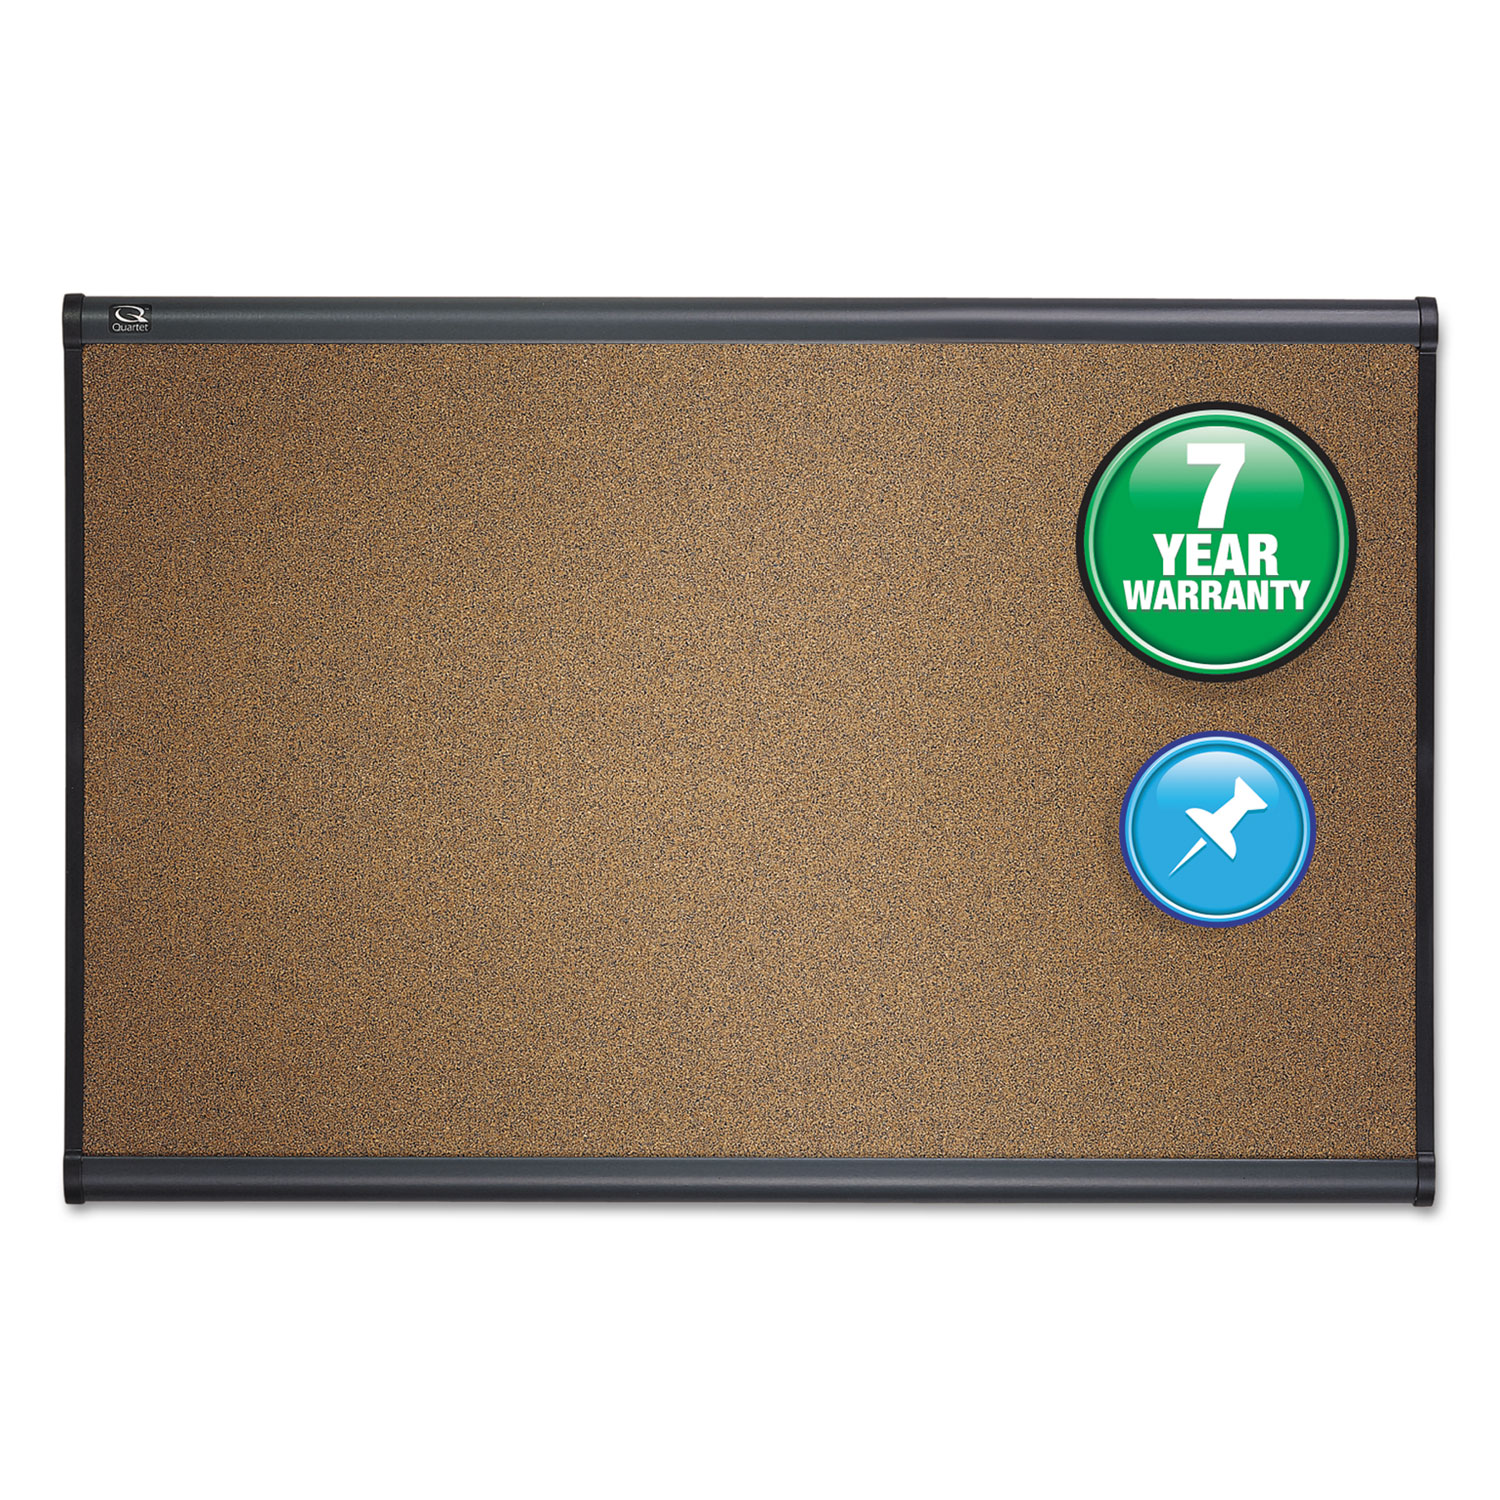  Quartet B244G Prestige Bulletin Board, Brown Graphite-Blend Surface, 48 x 36, Aluminum Frame (QRTB244G) 